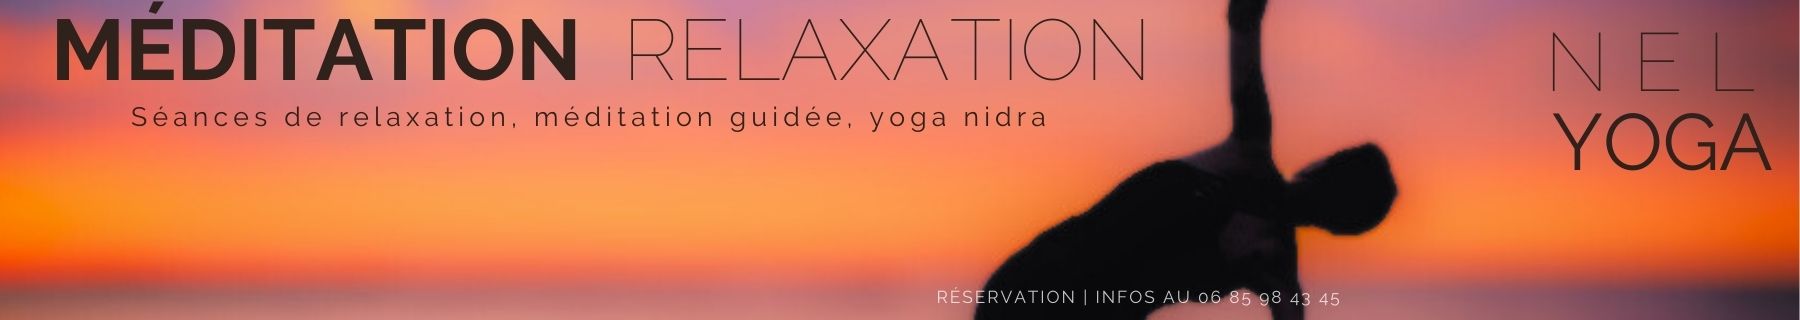 Relaxation, méditation, yoga nidra, gestion du stress